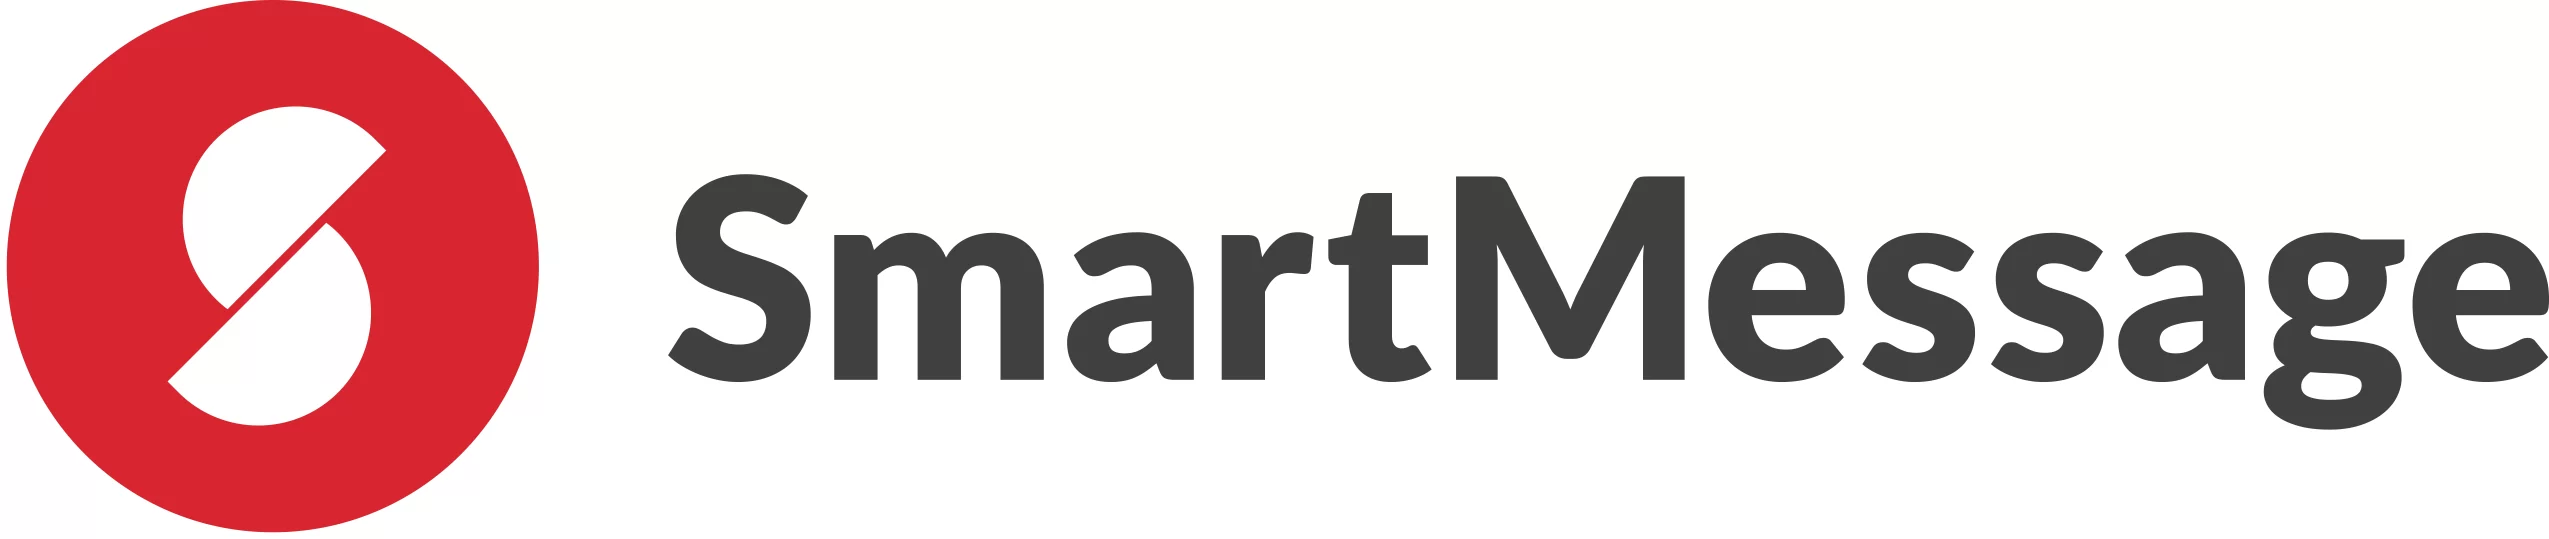 SmartMessage with SIM Kart -techdergi logo-